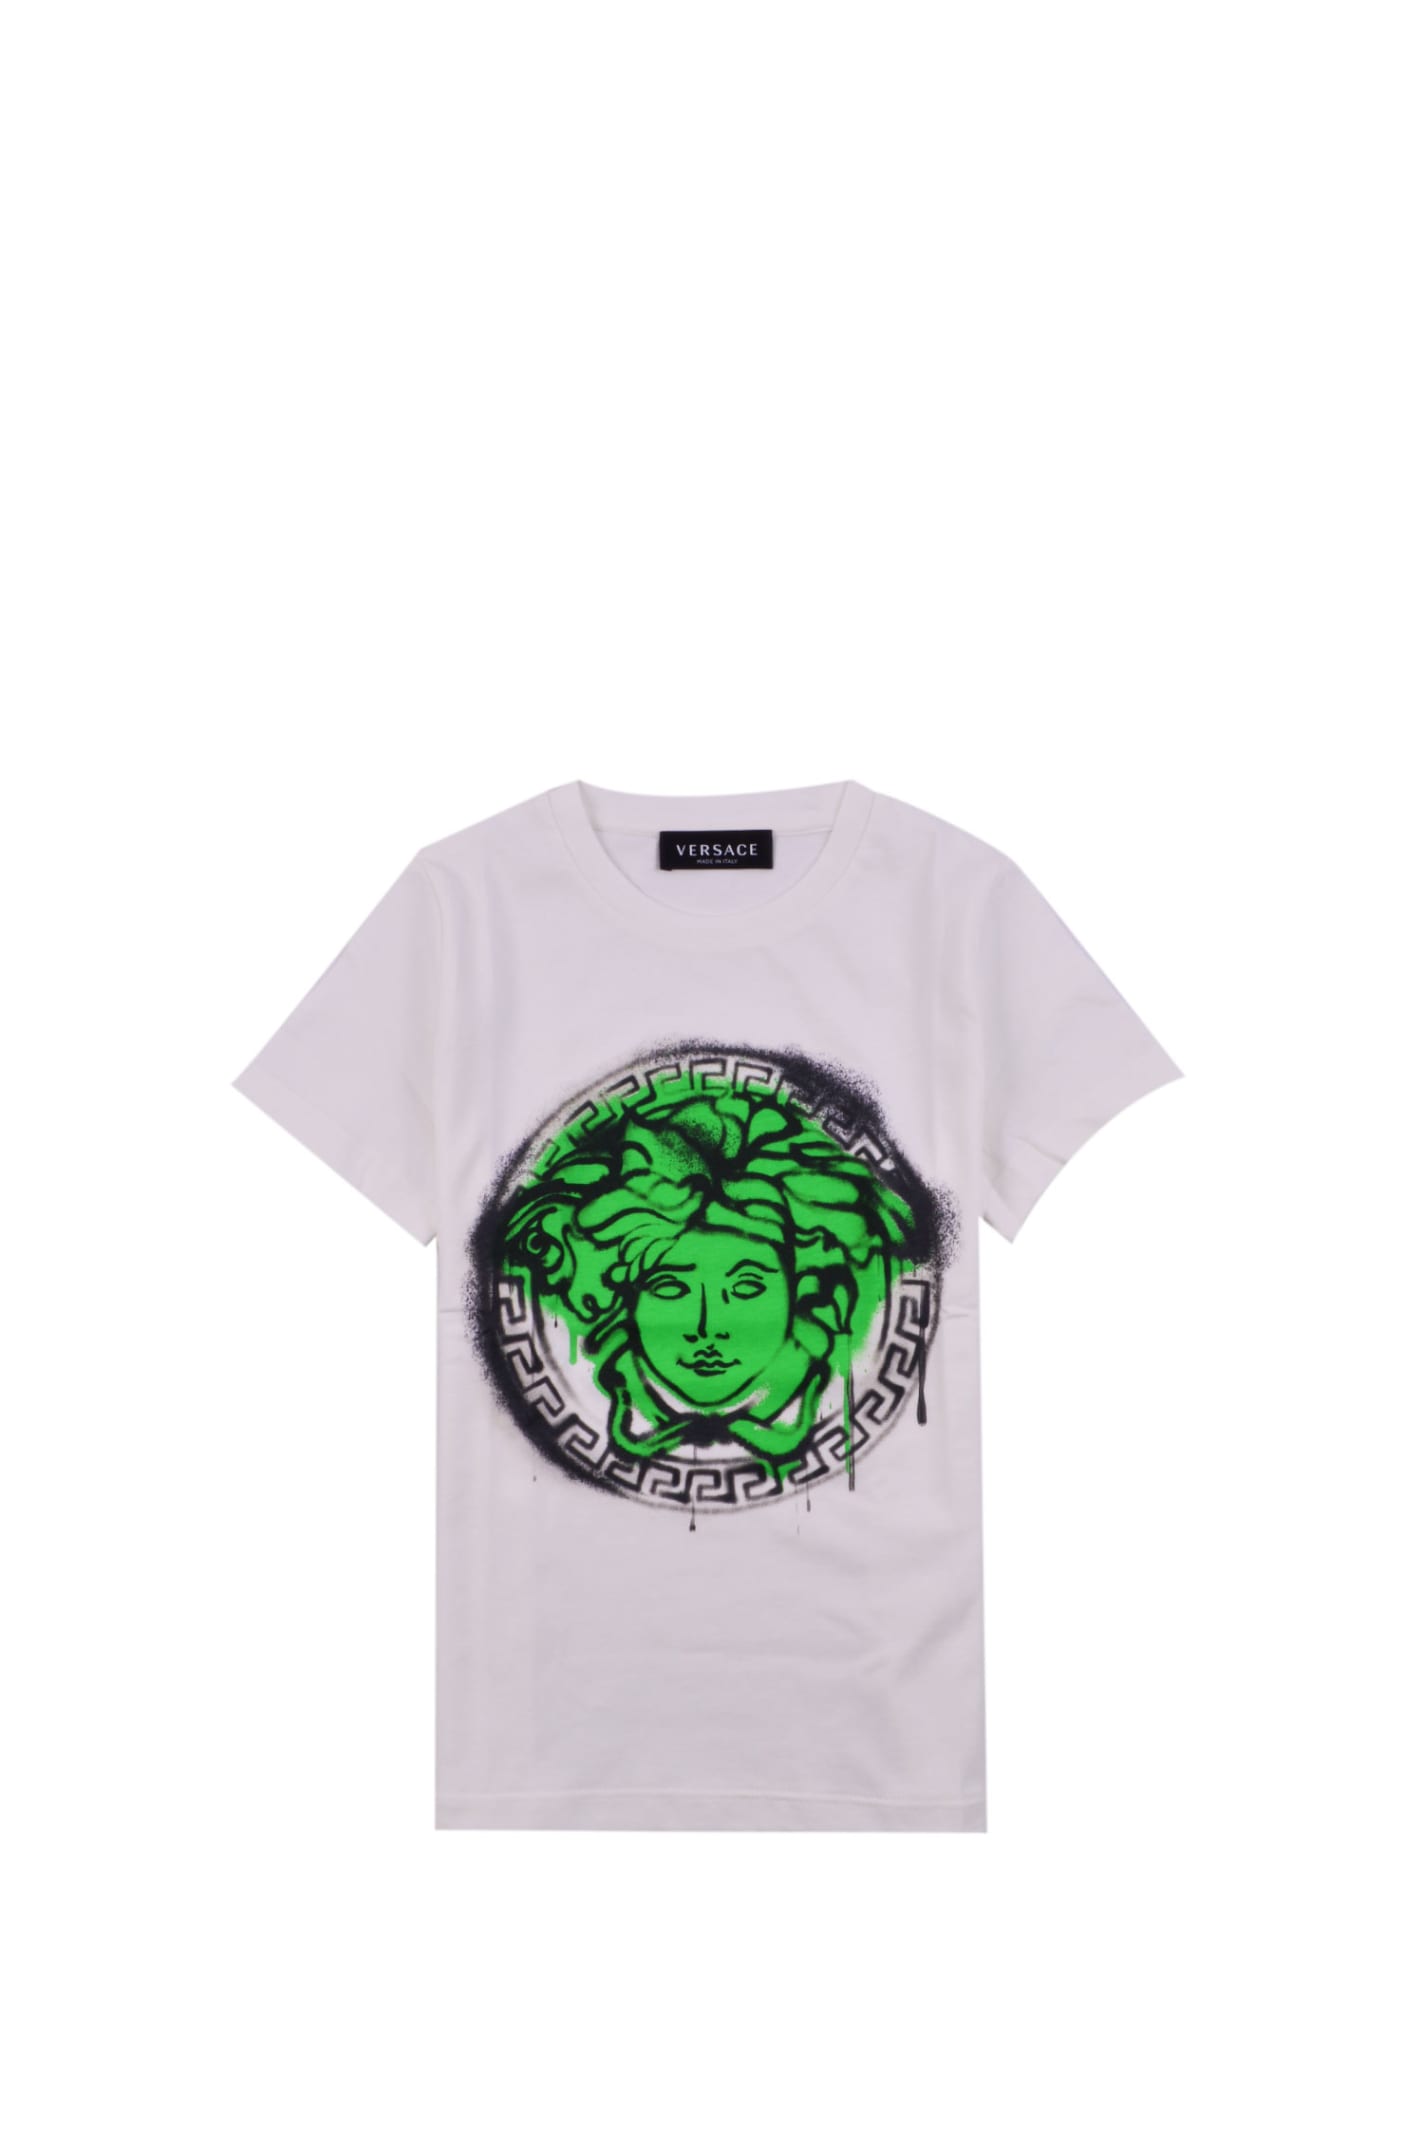 Versace Cotton T-shirt With Medusa Head Motif